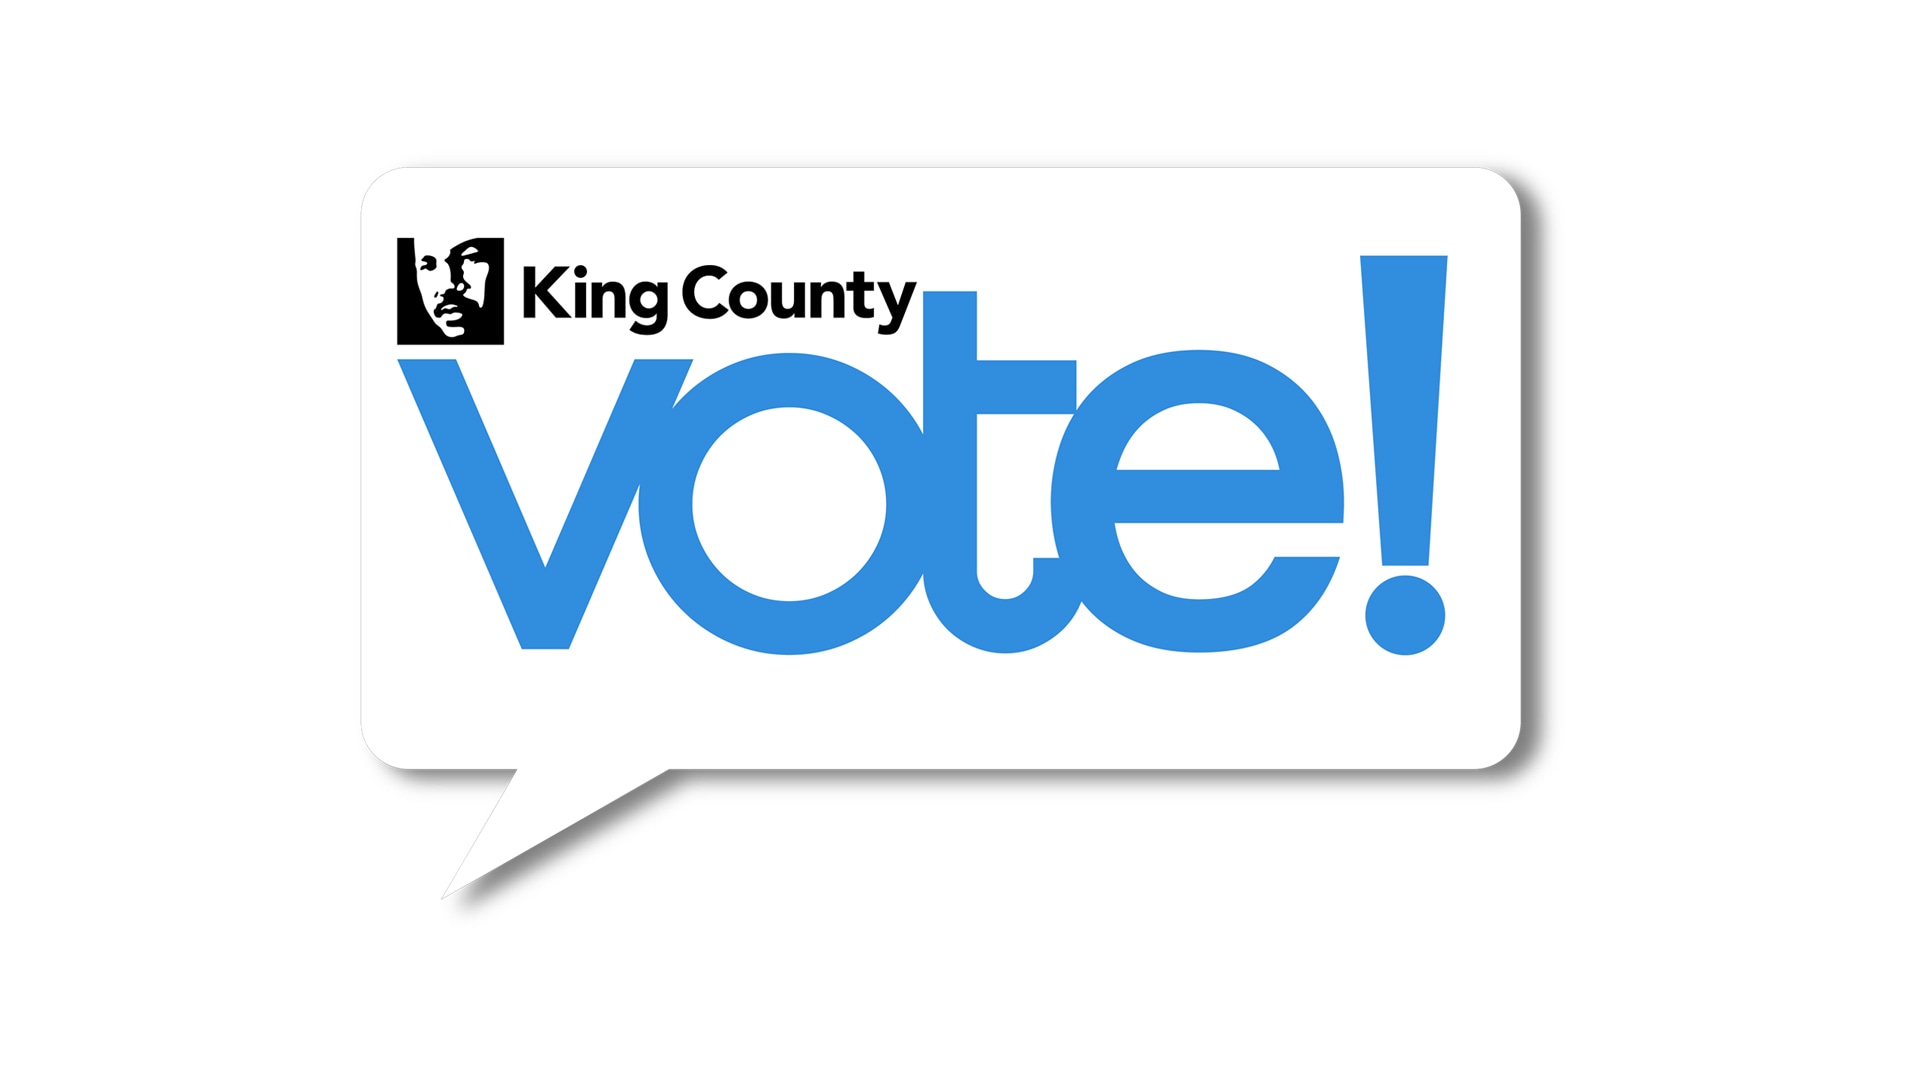 201021-king-county-vote-logo-1920